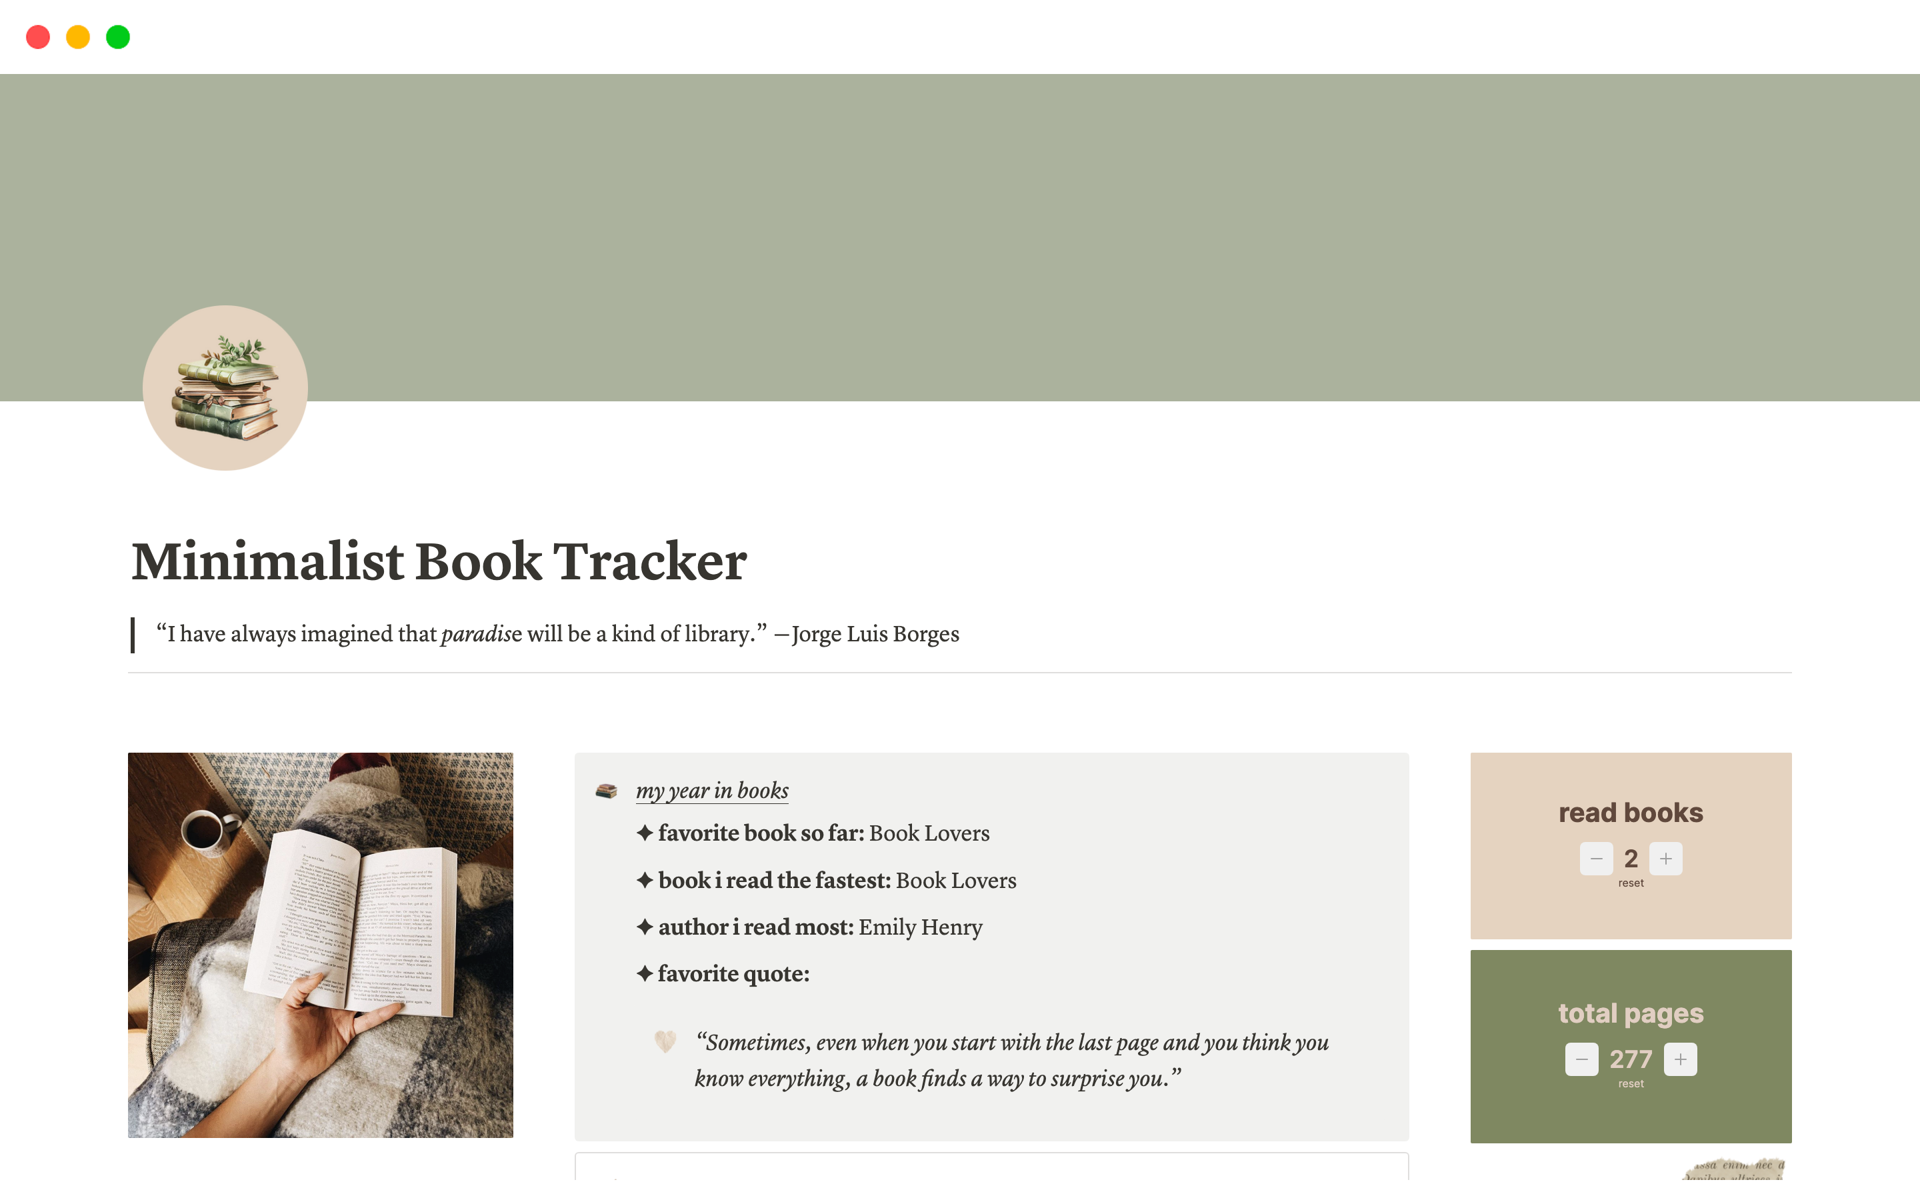 Vista previa de plantilla para Minimalist Book Tracker